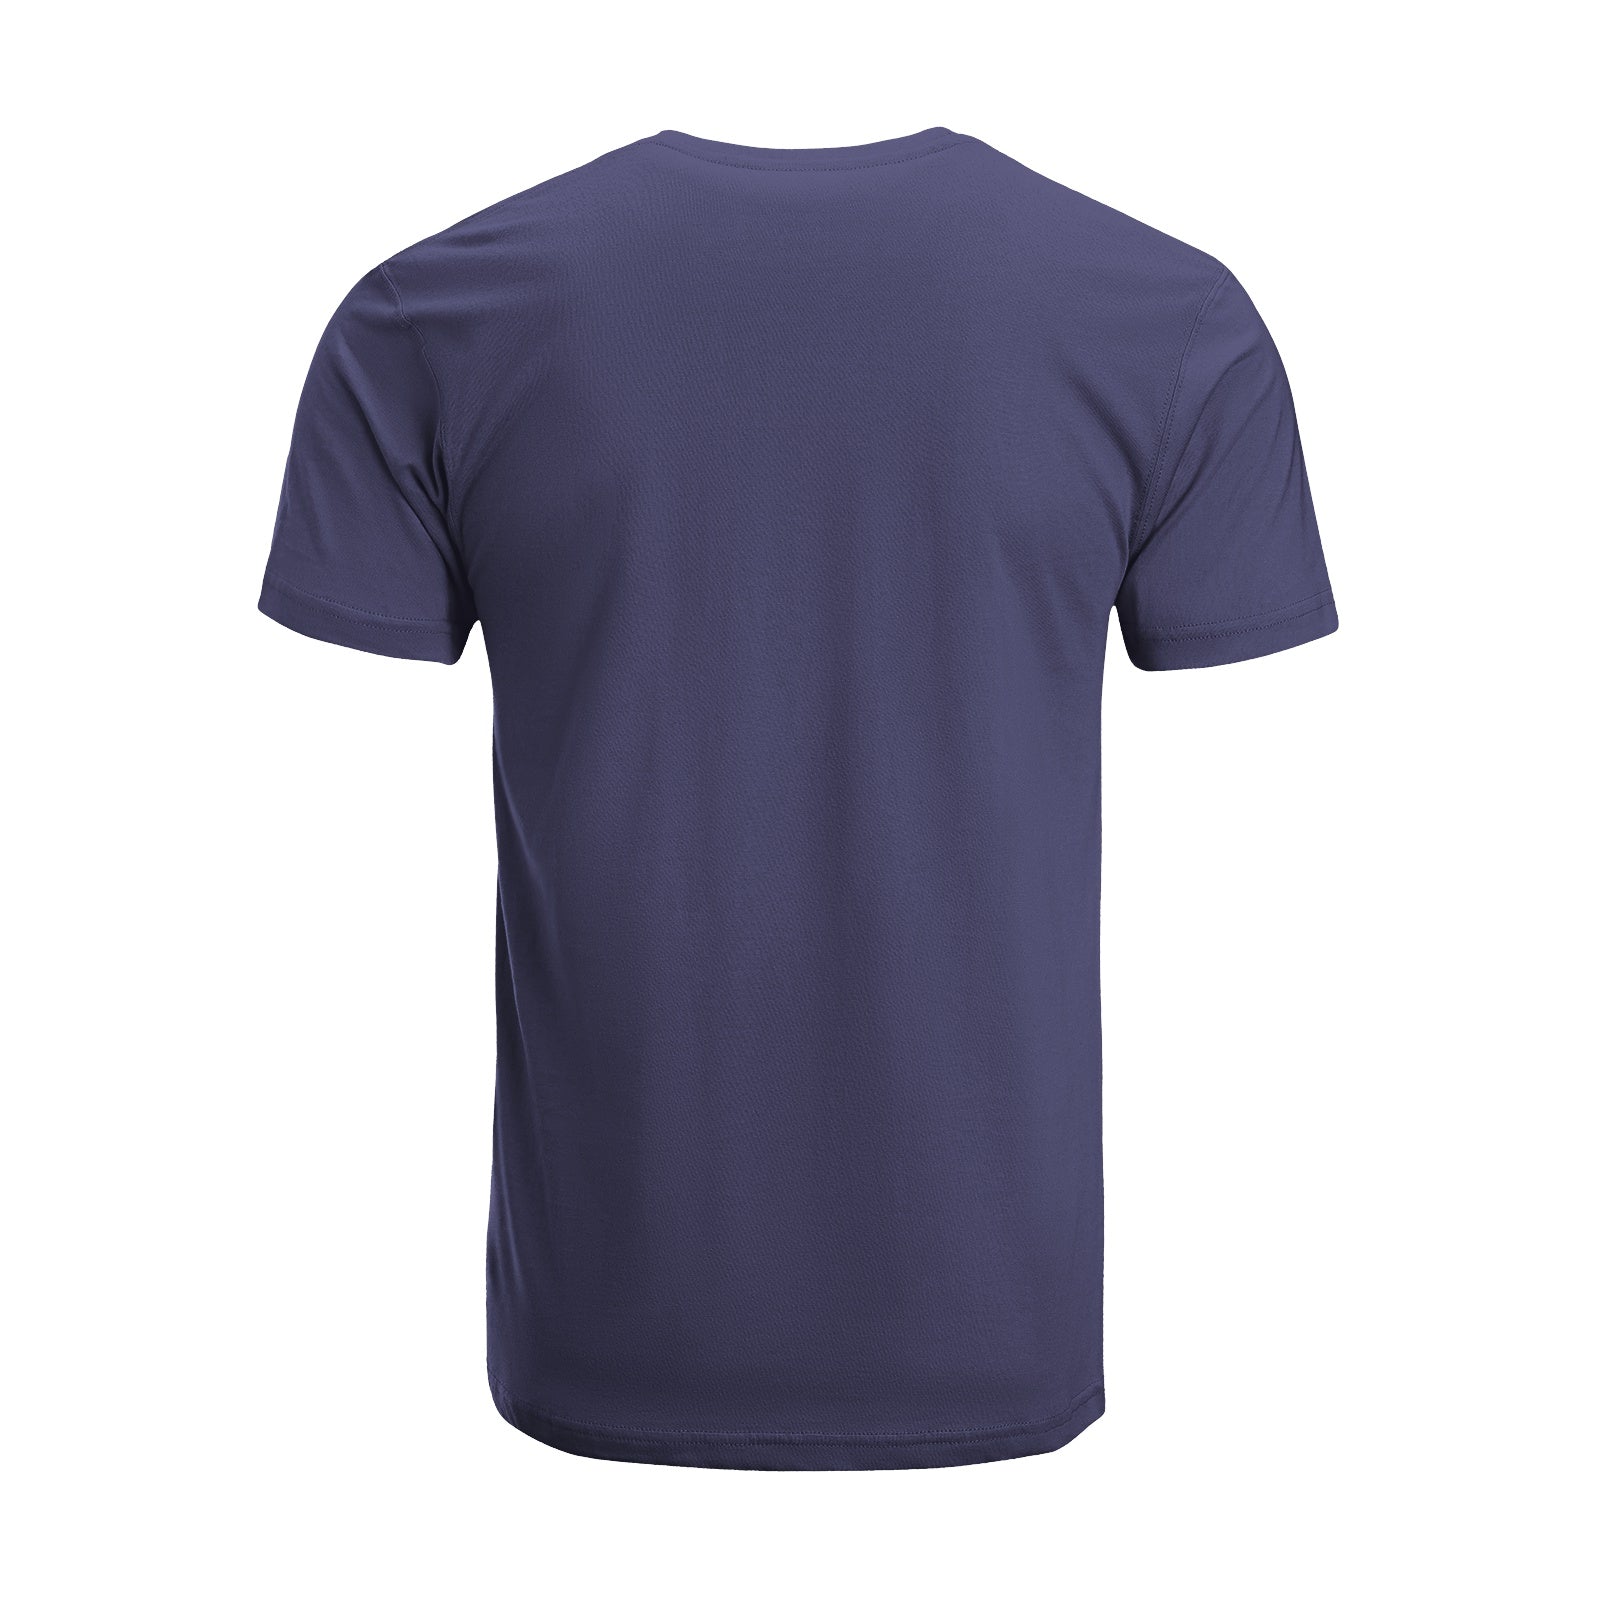 Unisex Short Sleeve Crew Neck Cotton Jersey T-Shirt DOG 05 - Tara-Outfits.com